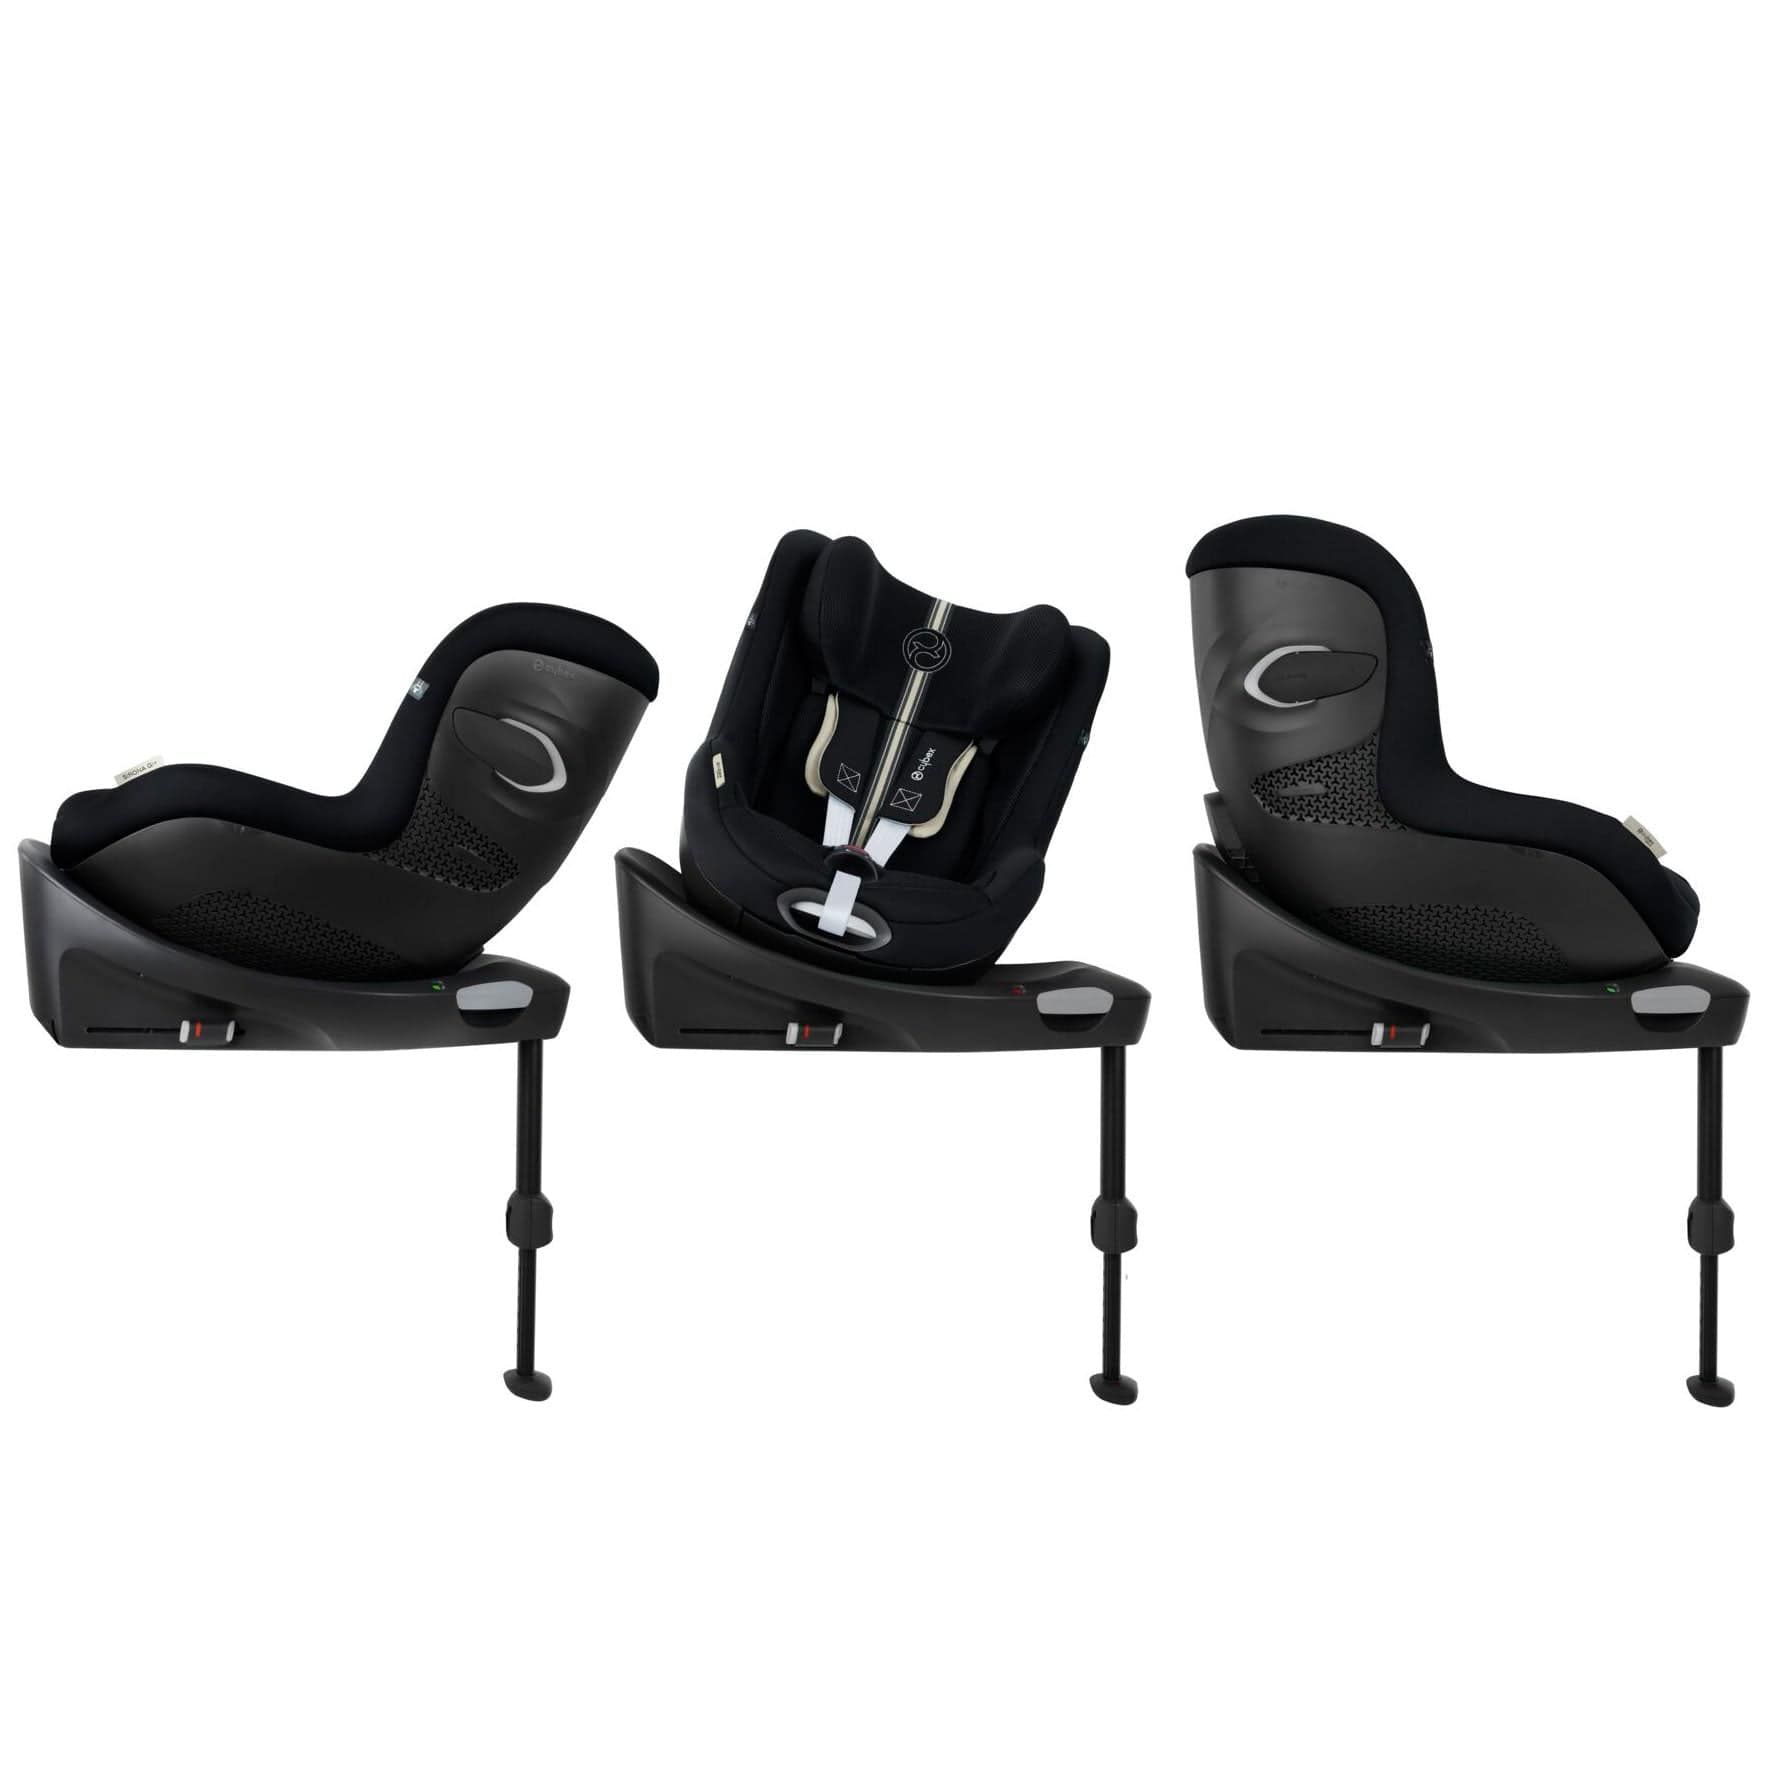 Cybex Sirona Gi i-Size Plus - Moon Black Swivel Car Seats 522004851 4063846411009